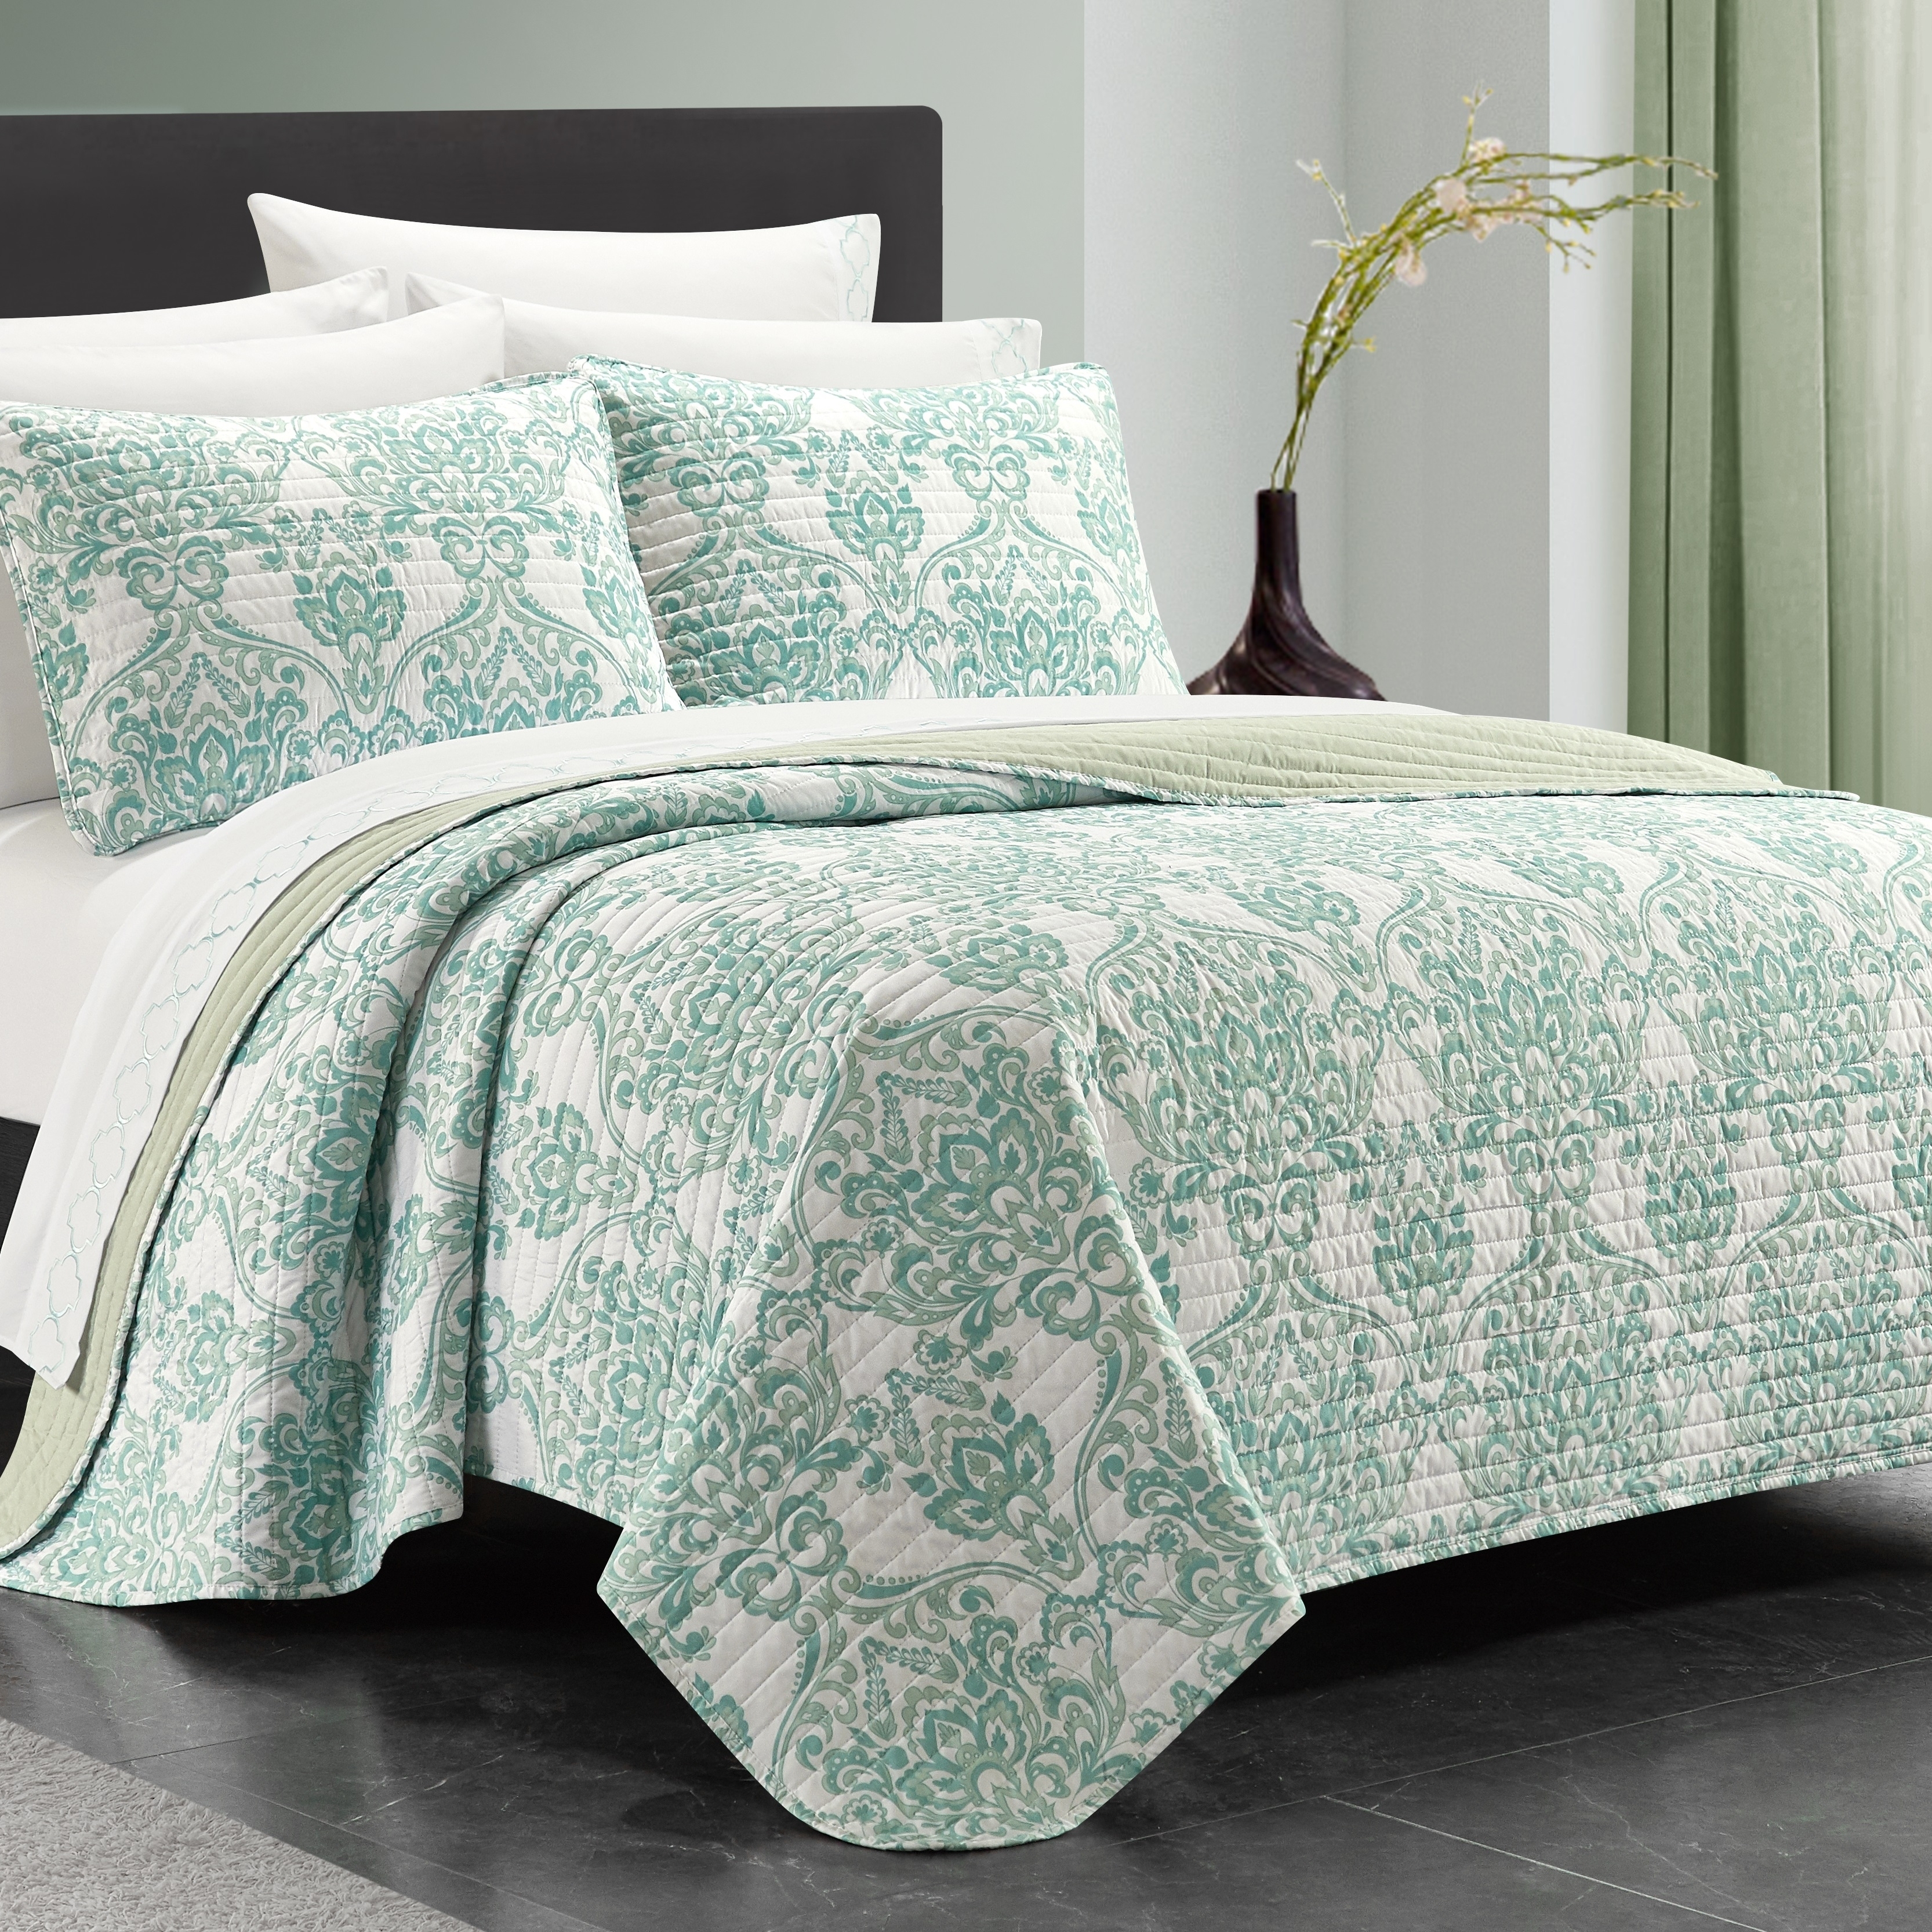 9 Or 6 Piece Quilt Set Medallion Or Floral Pattern Print Reversible Bed In A Bag - Sage Green, King